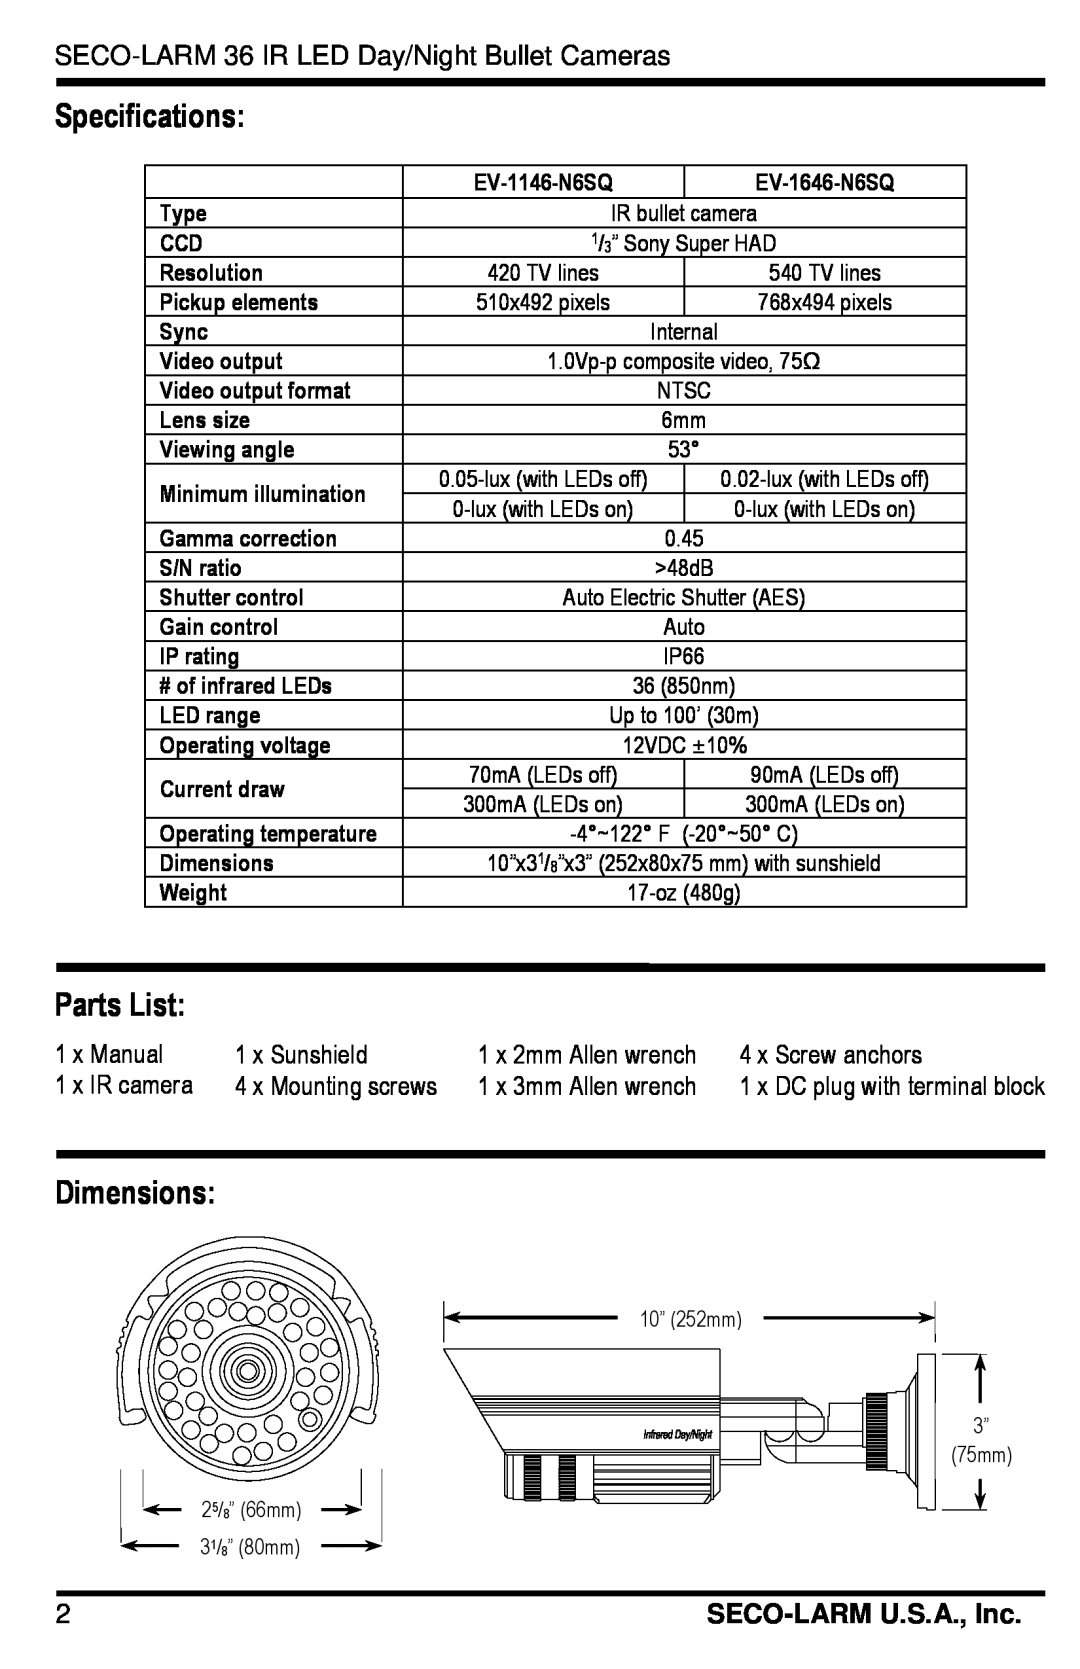 SECO-LARM USA EV-1646-N6SQ, EV-1146-N6SQ manual Specifications, Parts List, Dimensions, SECO-LARM U.S.A., Inc 